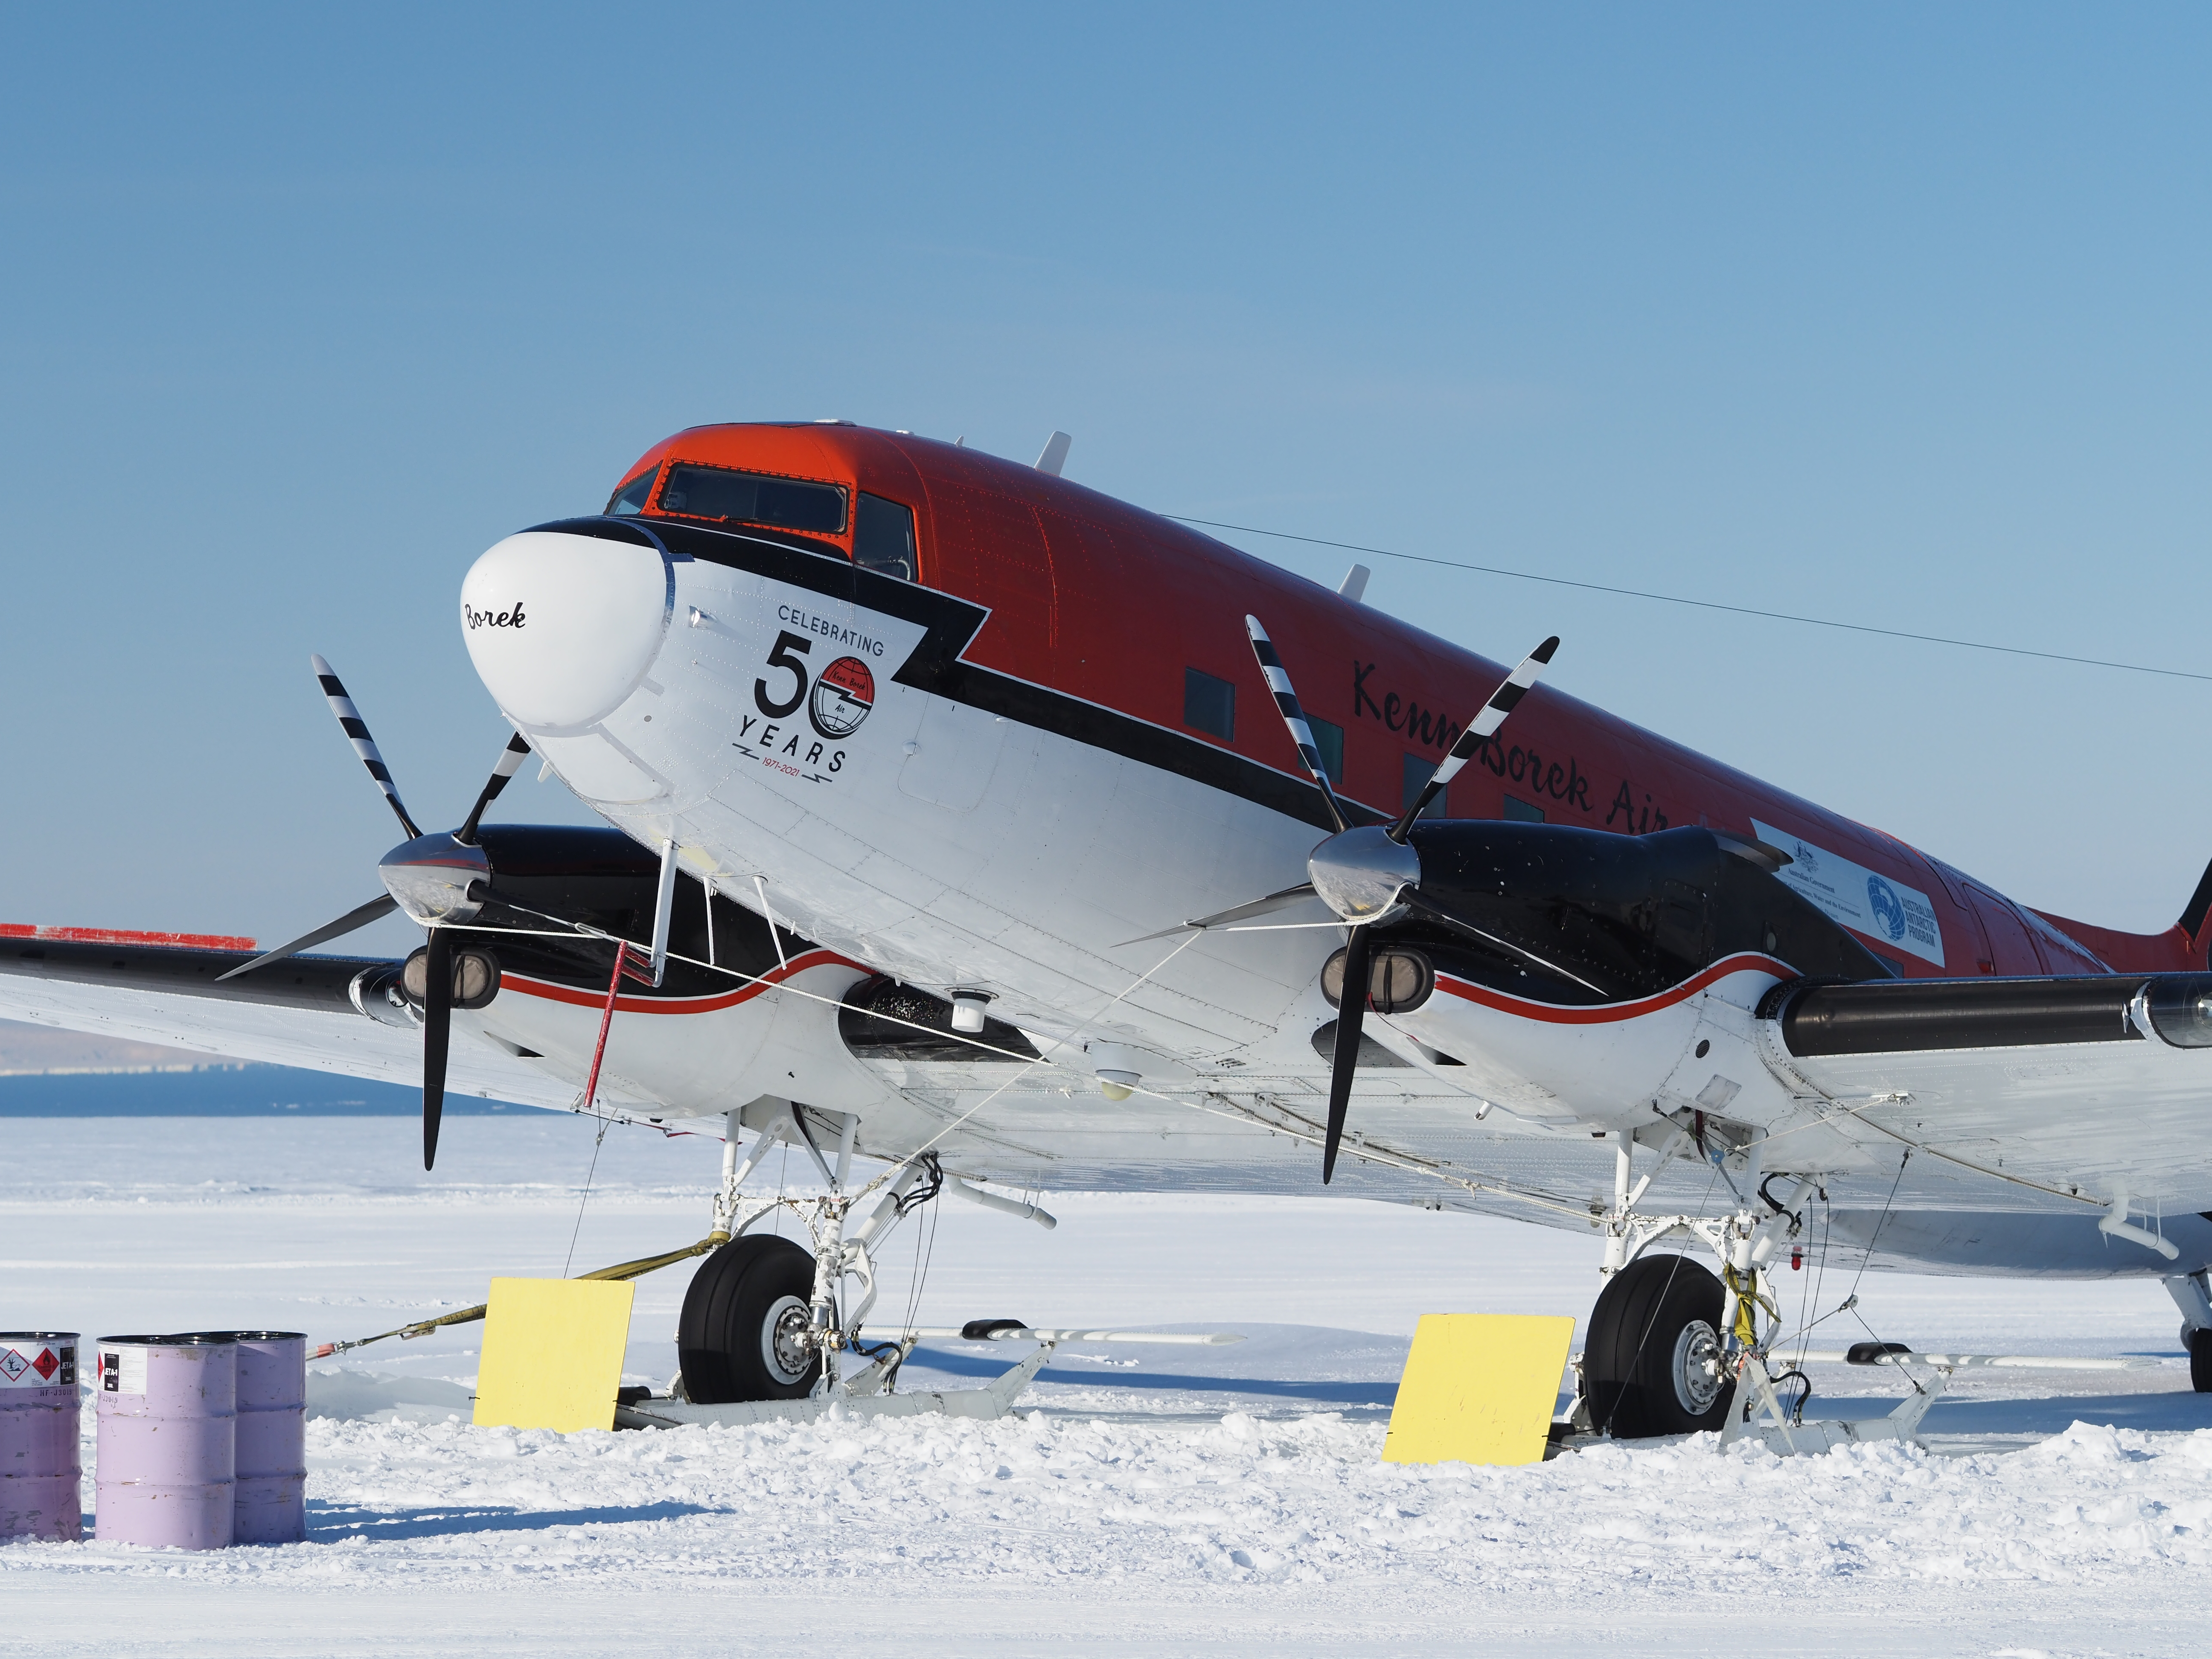 Icefield instrument in Antarctica 2021